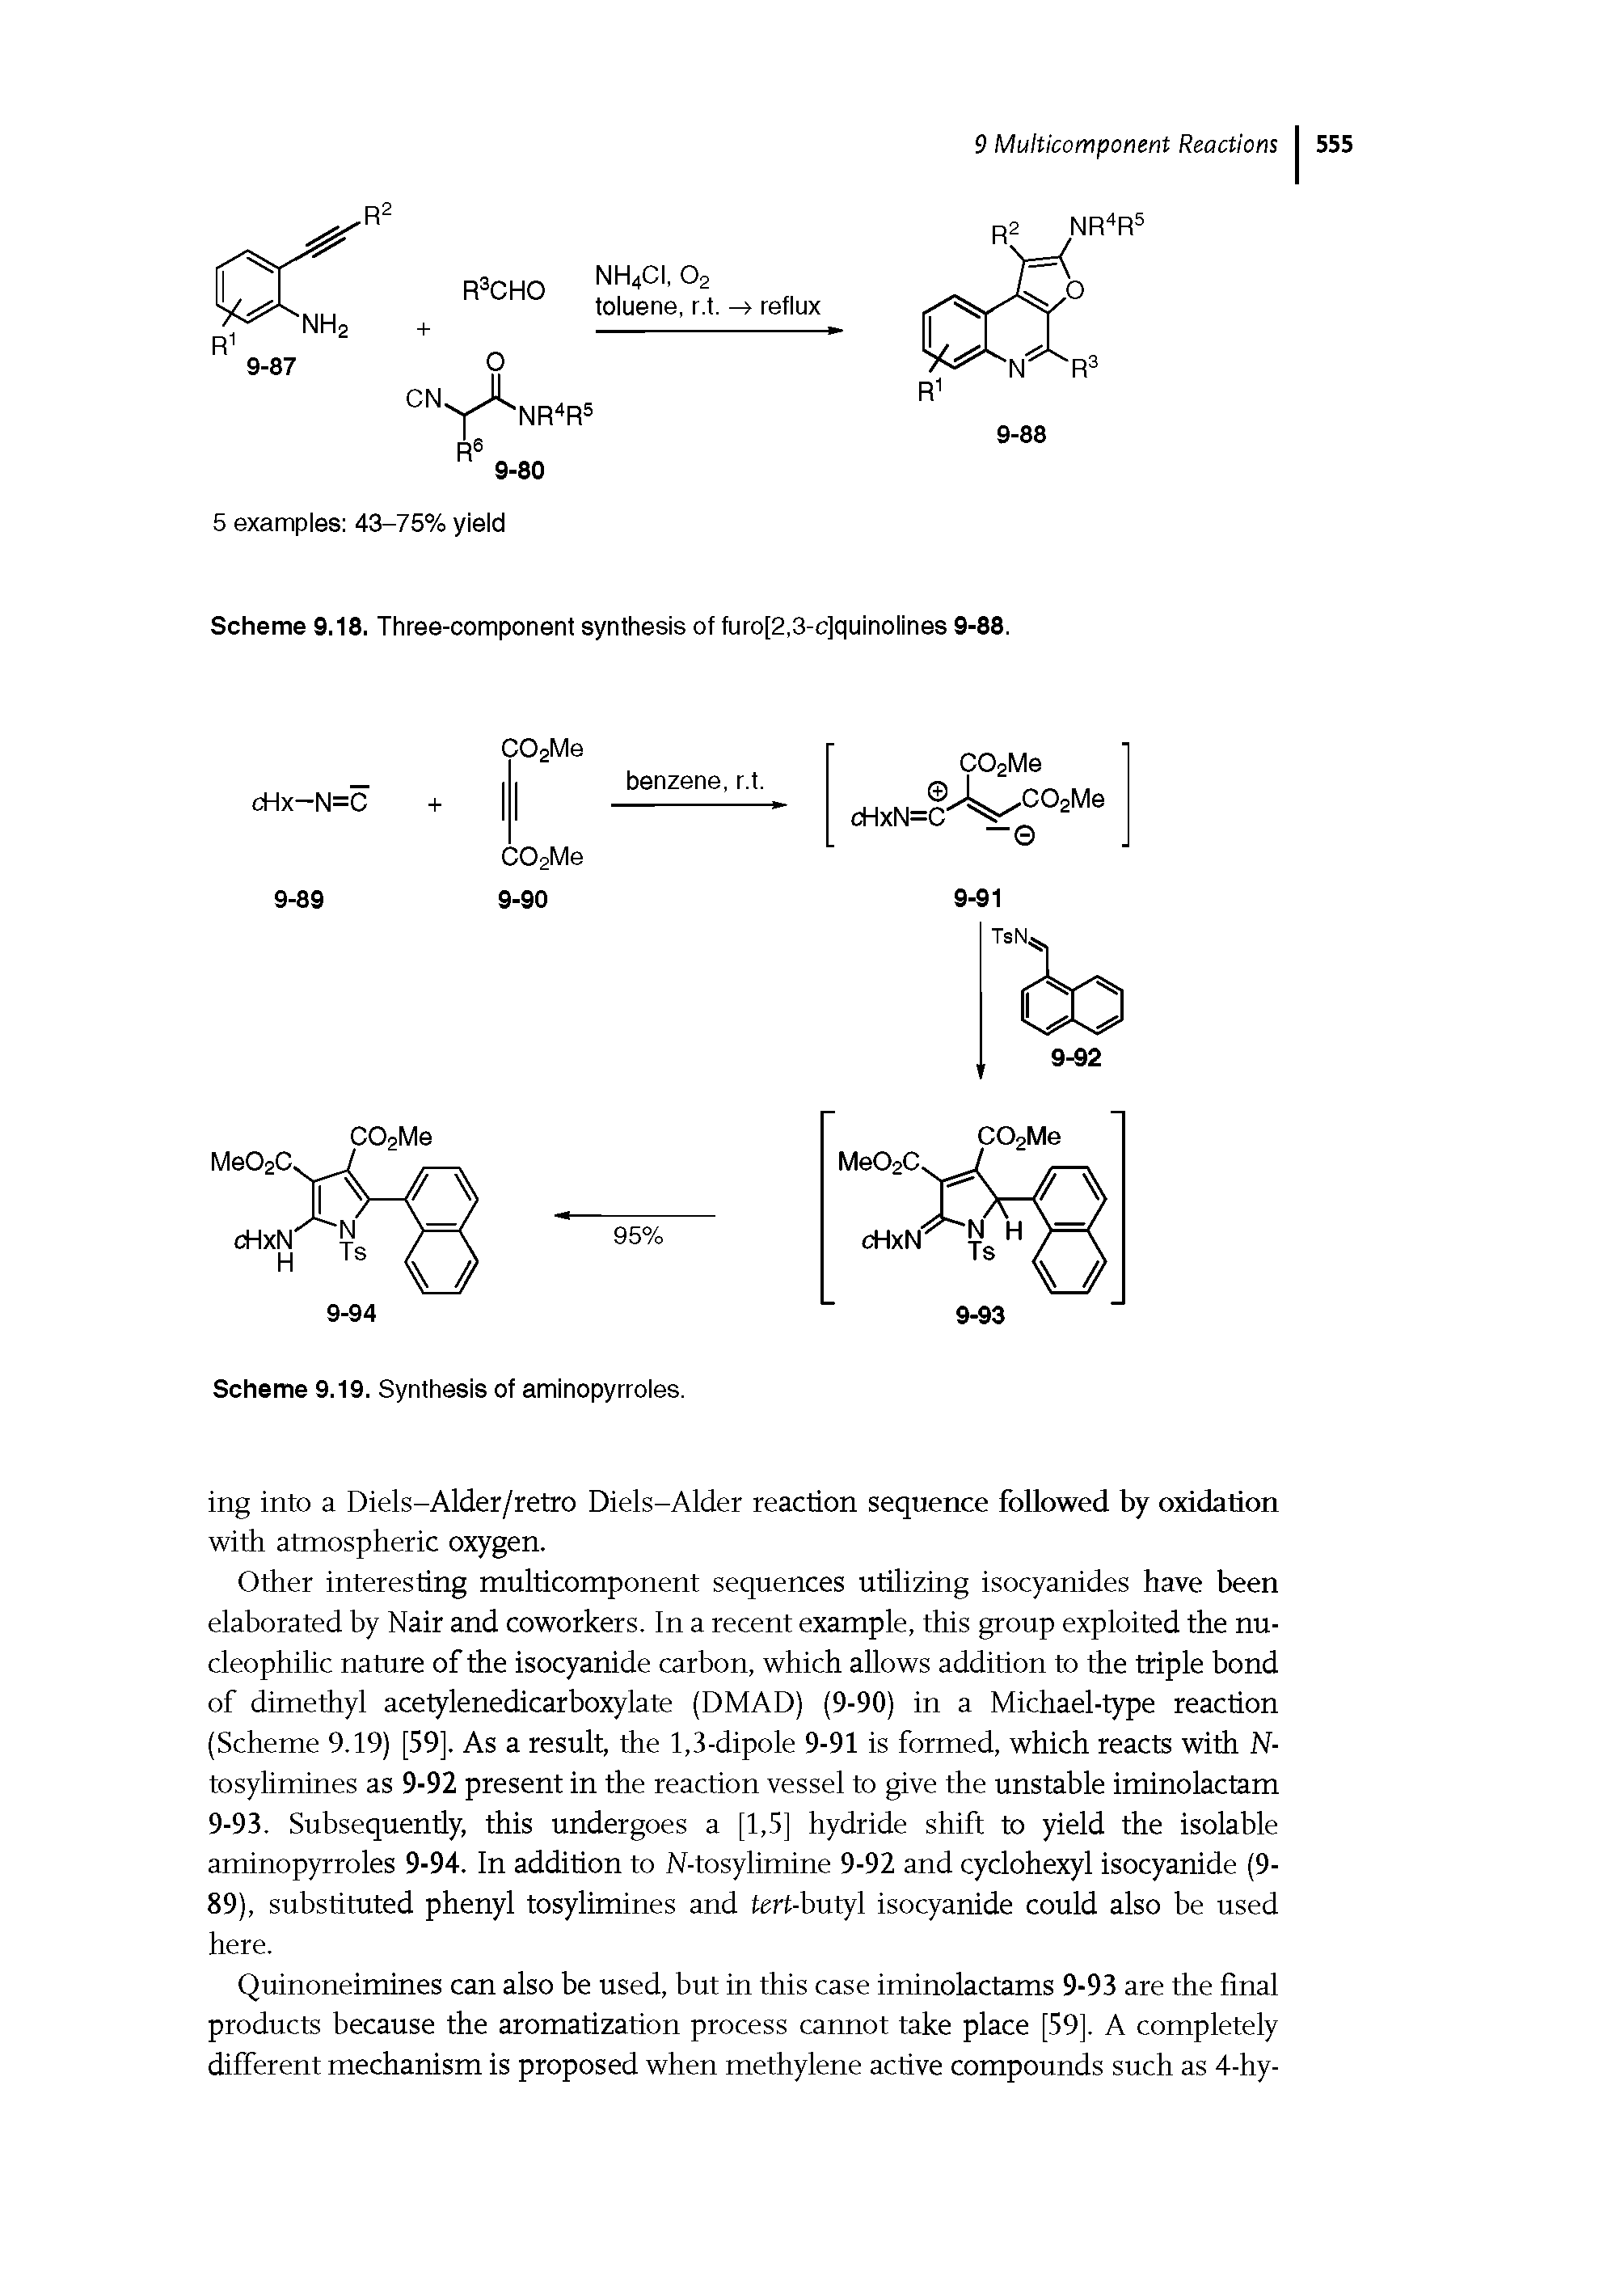 Scheme 9.18. Three-component synthesis of furo[2,3-c]quinolines 9-88.